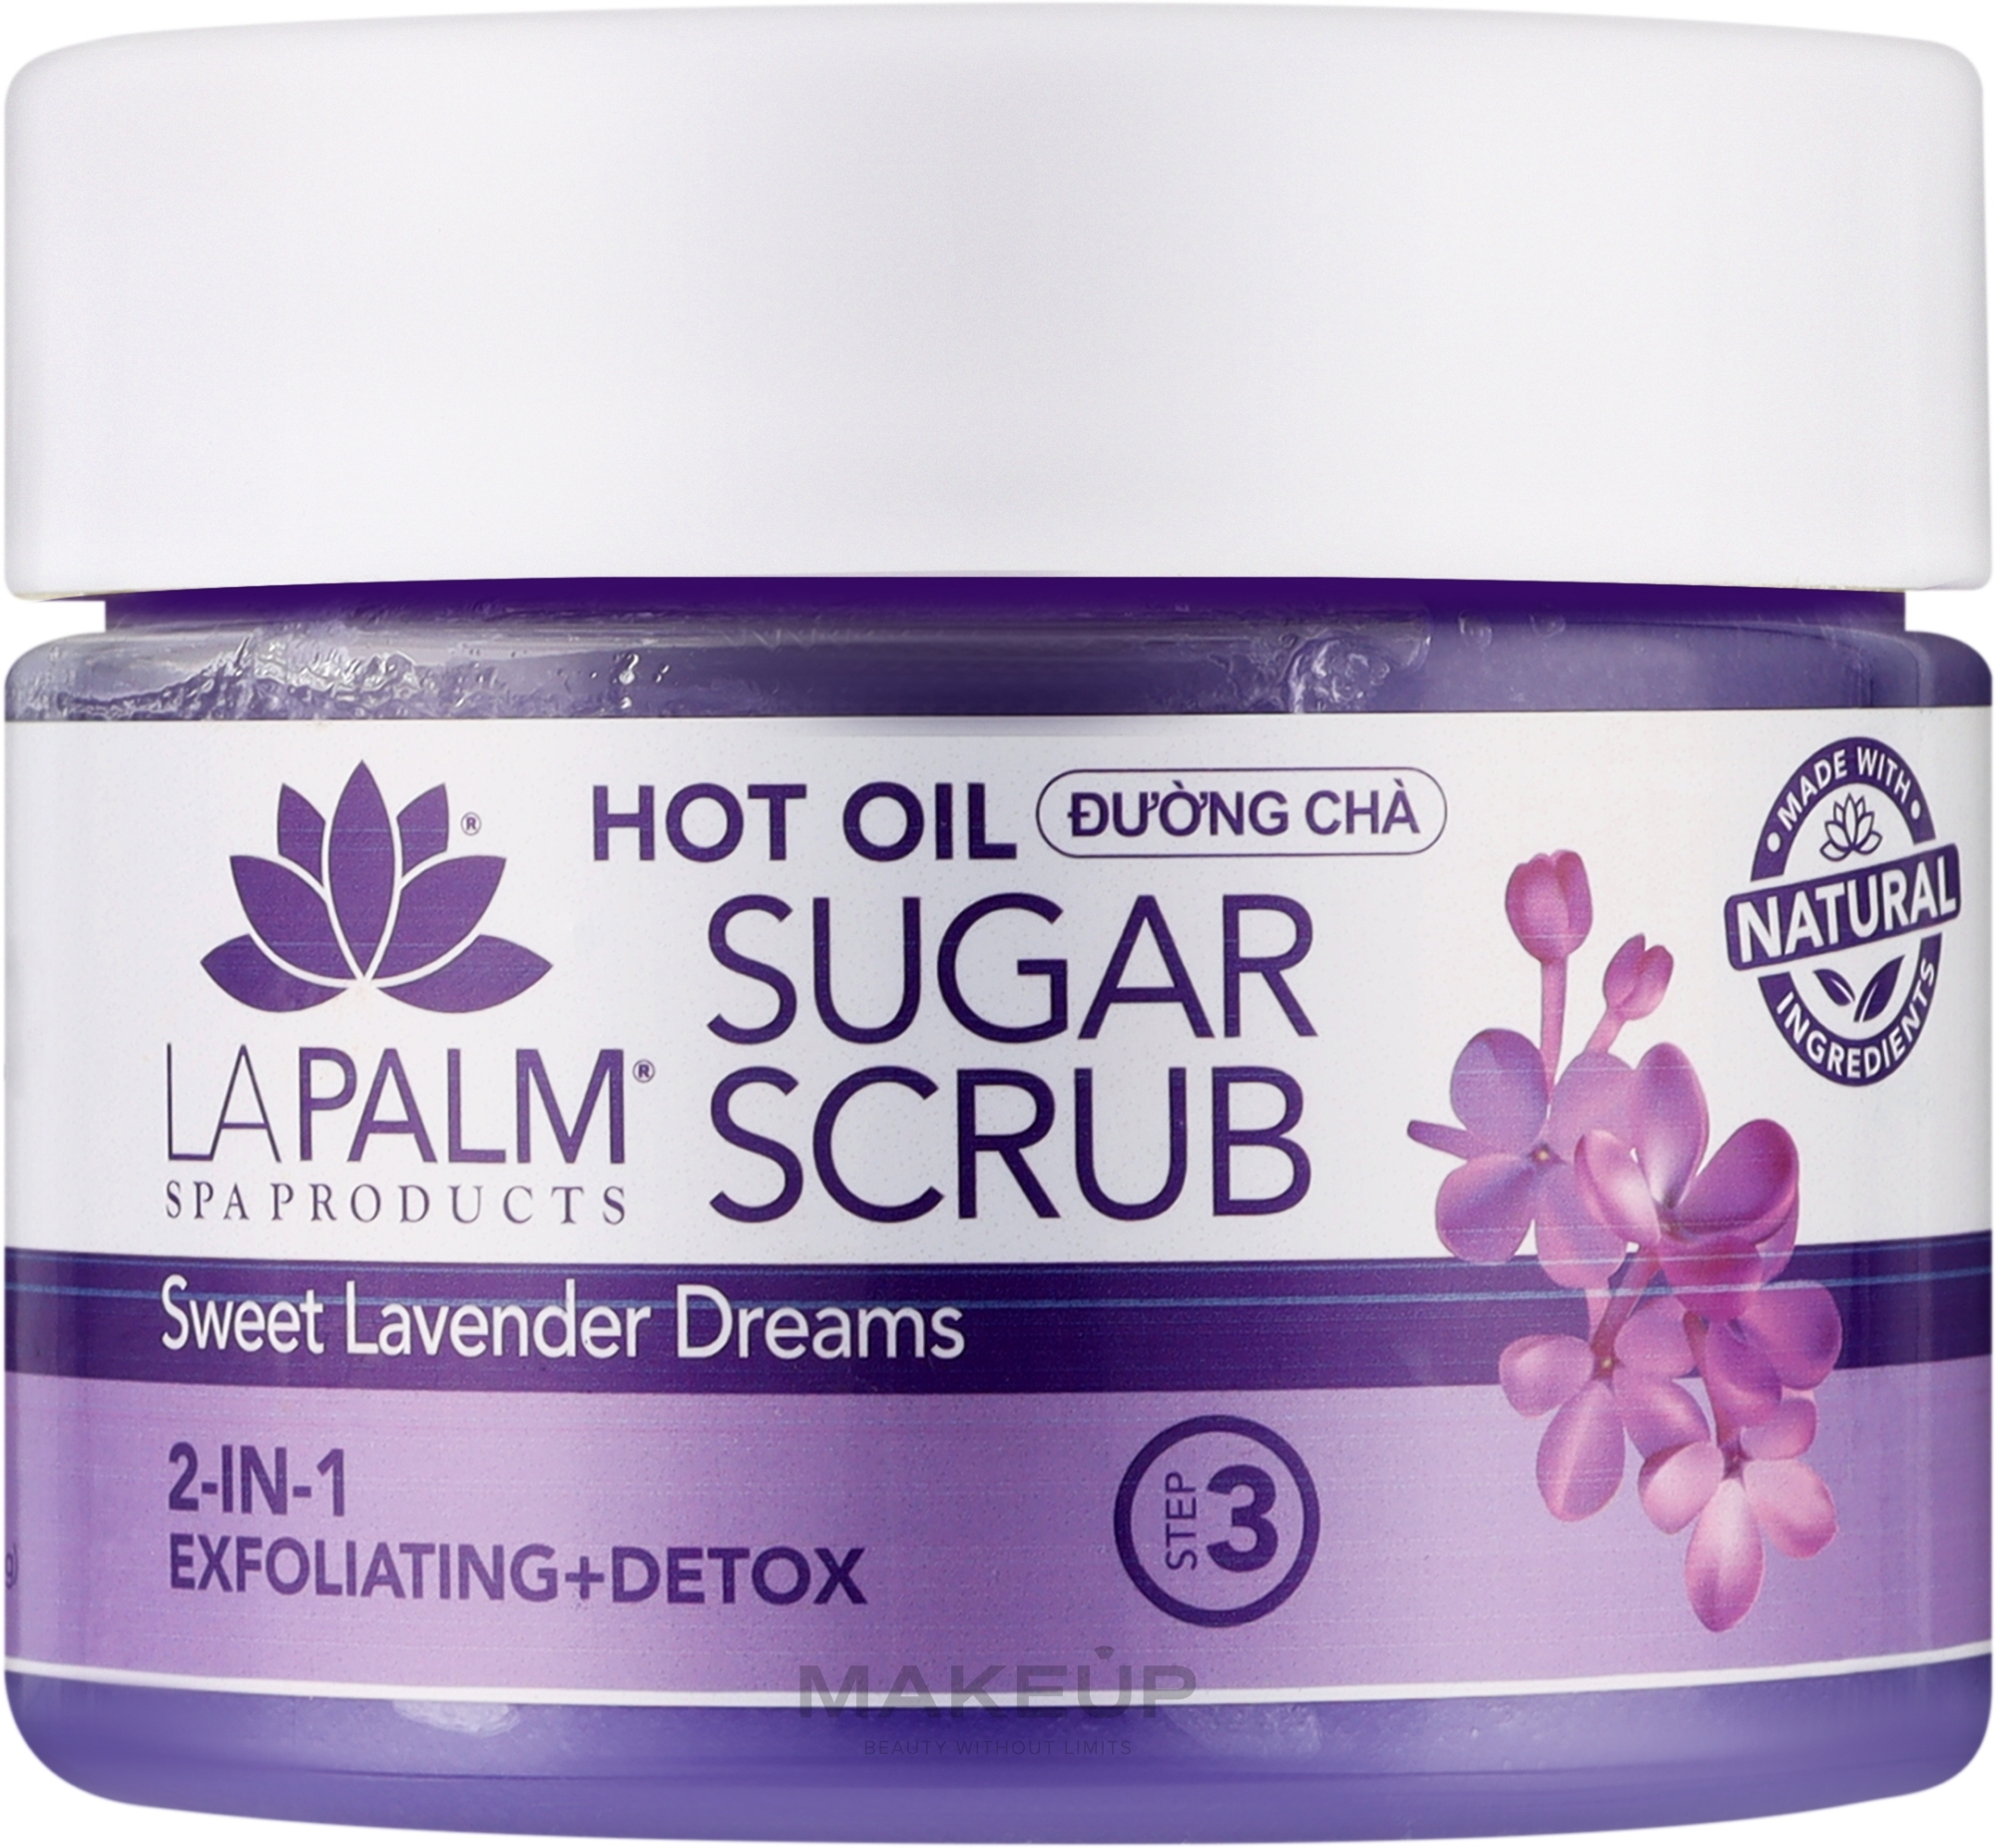 Сахарно-масляный скраб для ног "Сладкие лавандовые сны" - La Palm Hot Oil Sugar Scrub Sweet Lavender Dreams — фото 340g